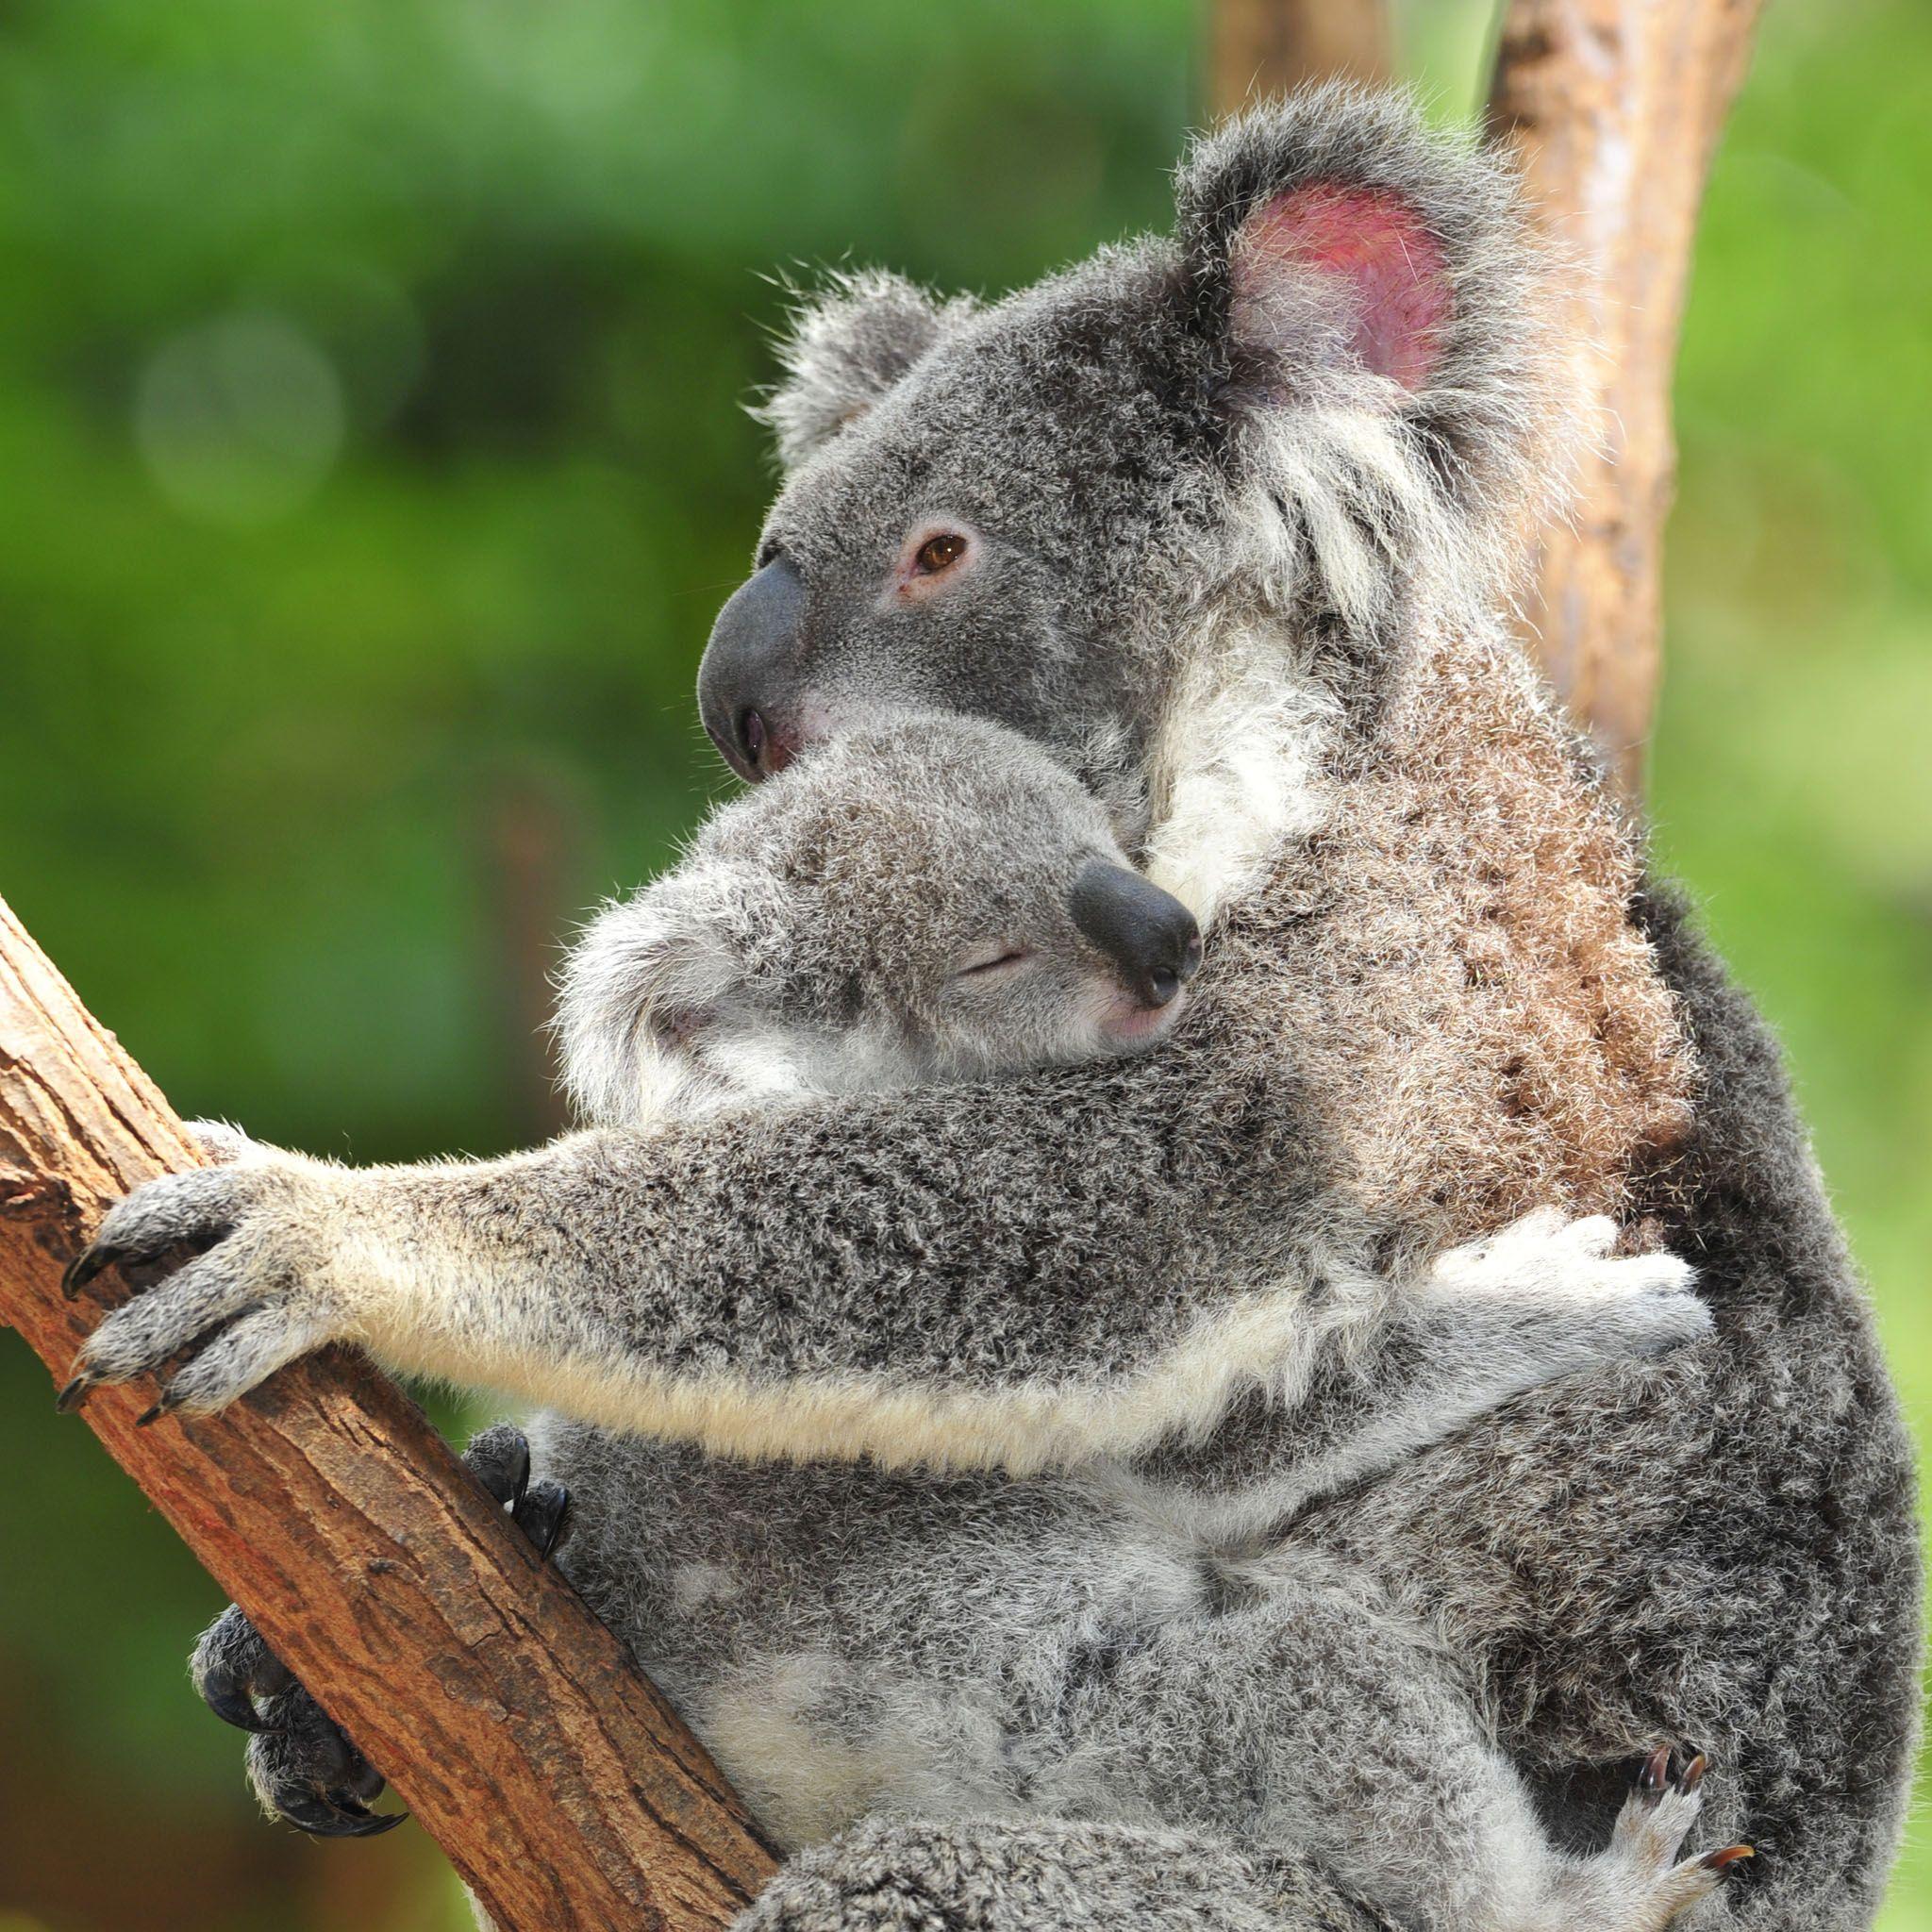 Newborn Baby Koalas